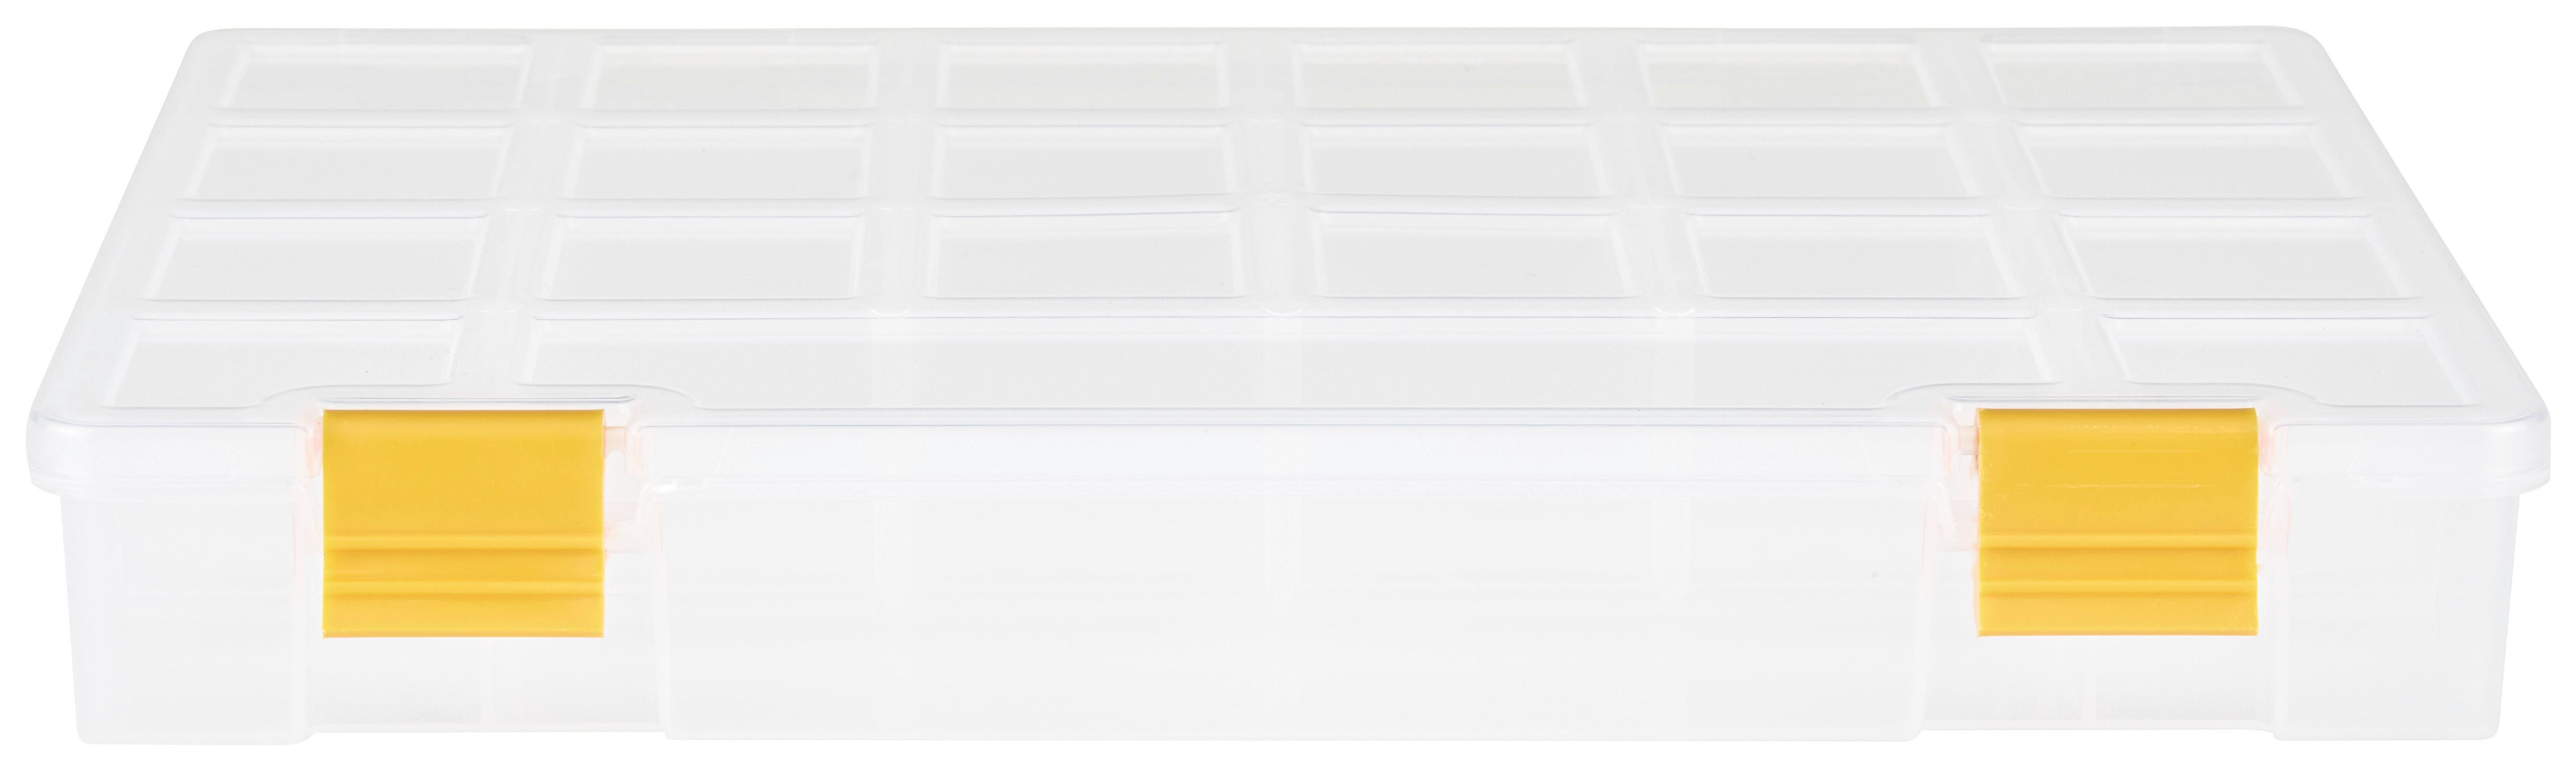 Sortimentskasten Finn 21 Fächer, Transparent - Transparent/Gelb, KONVENTIONELL, Kunststoff (27,6/20,3/4,2cm) - Homezone